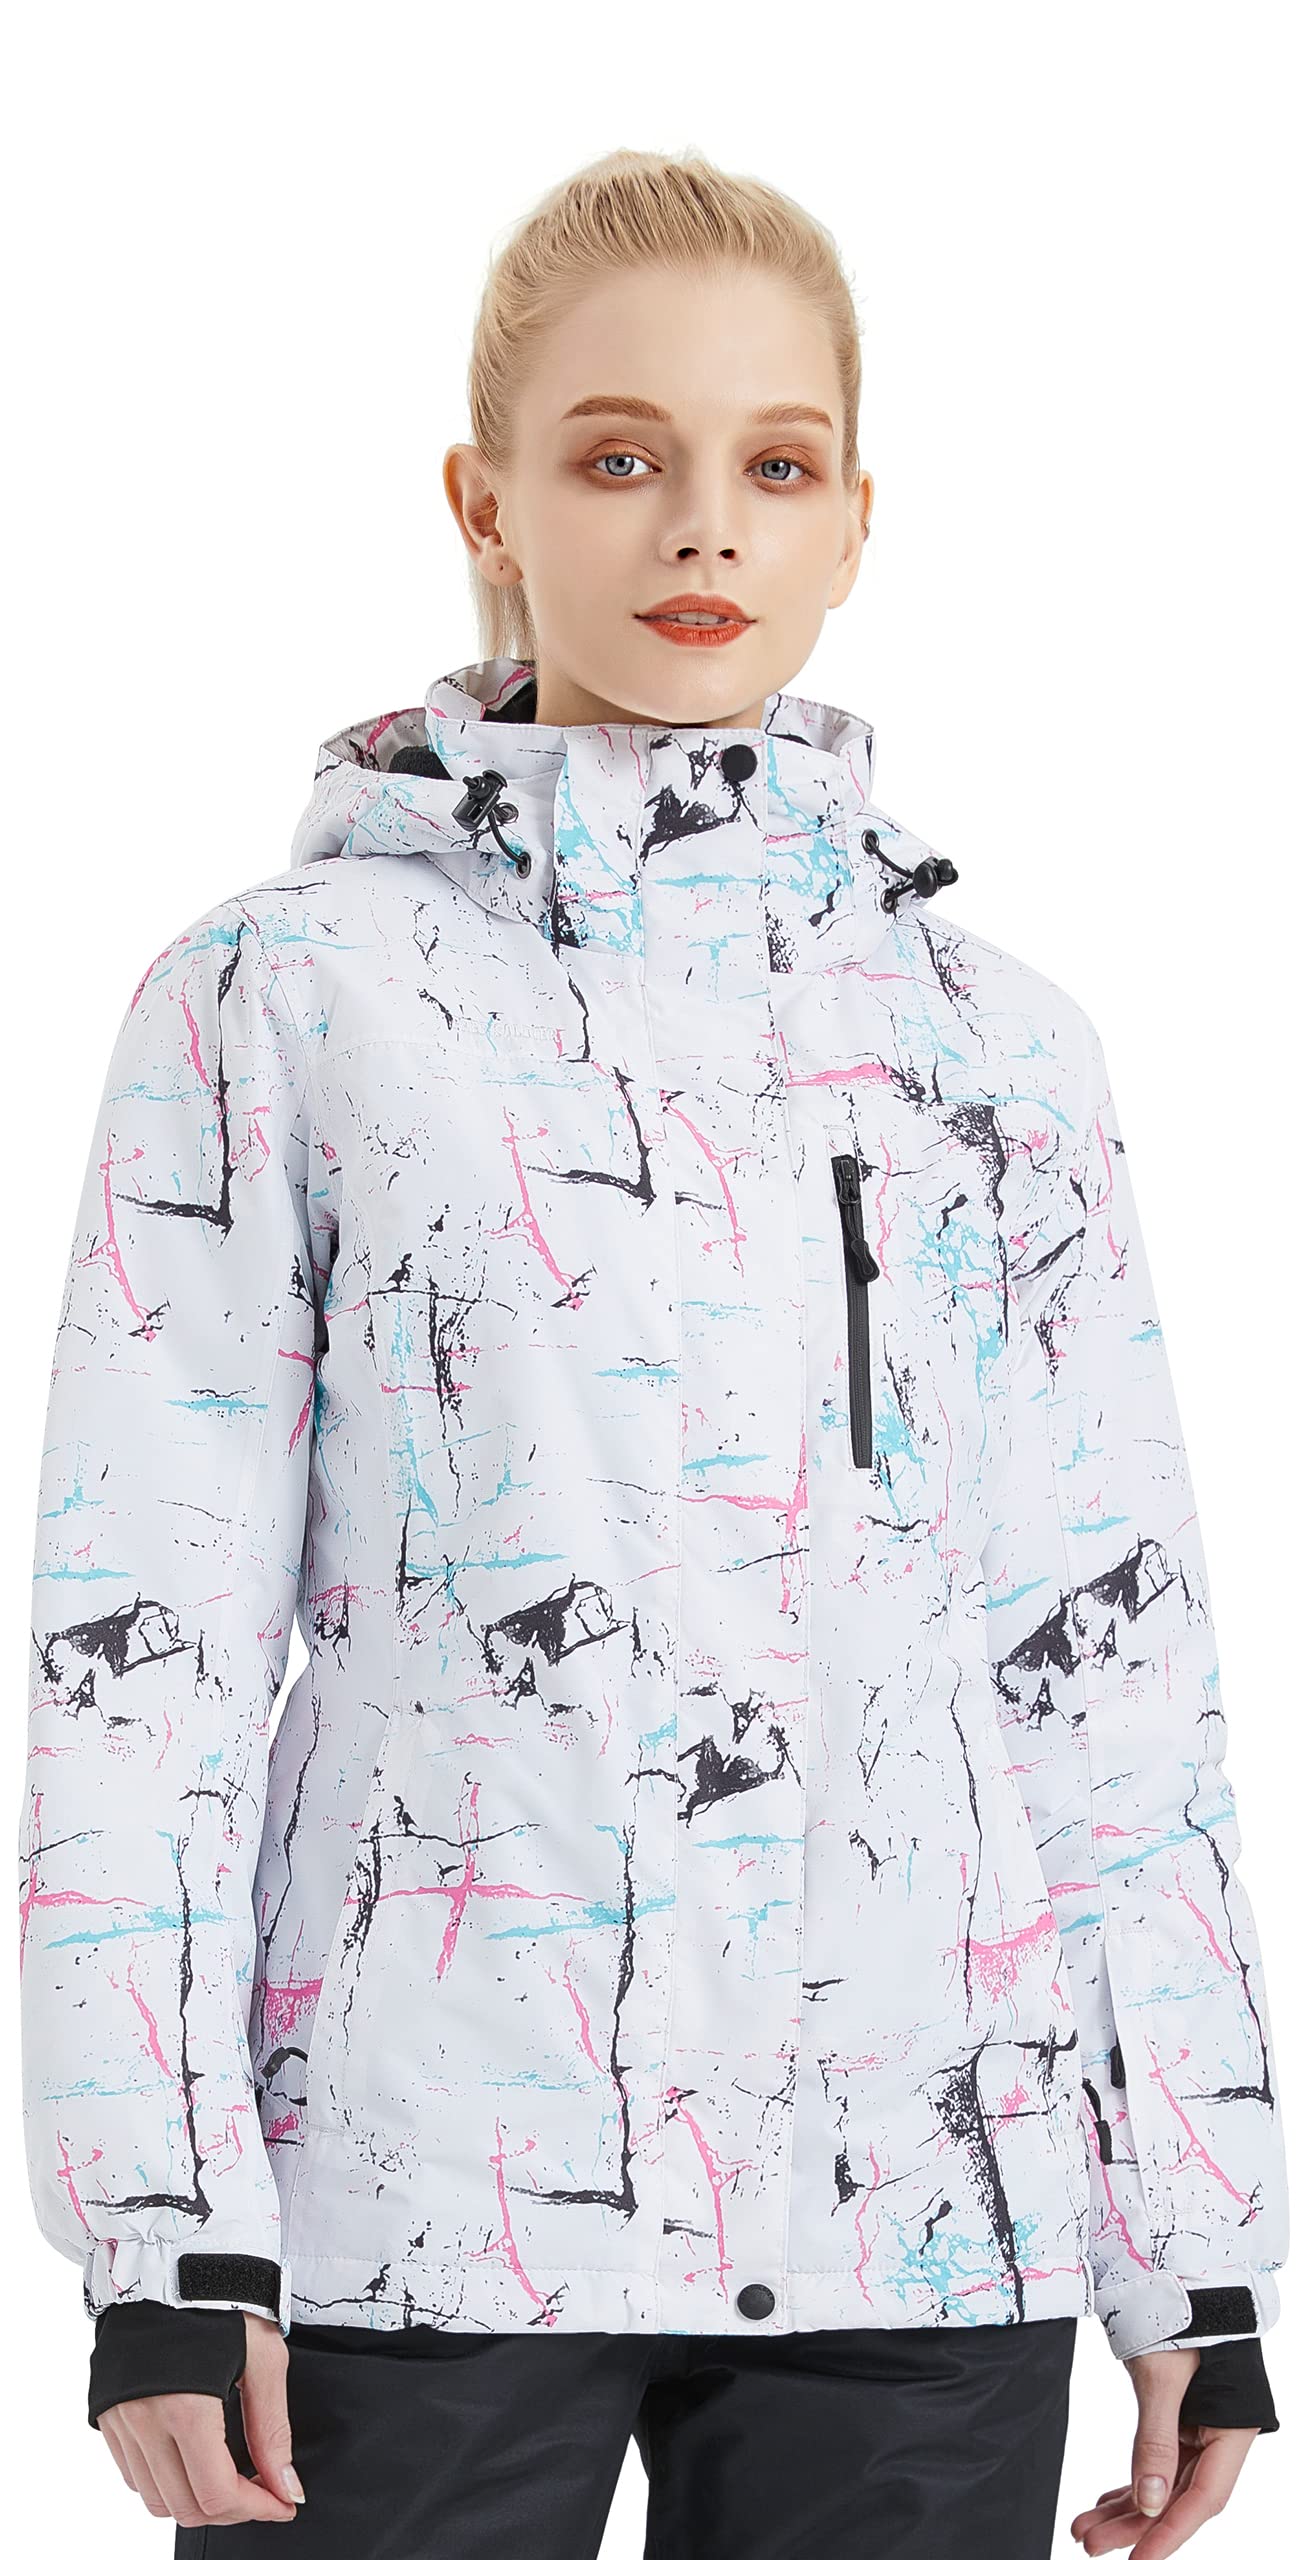 FREE SOLDIER Womens Waterproof Ski Snow Jacket Fleece Lined Warm Winter Rain Jacket with Hood Fully Taped Seams(Floral Print,L)